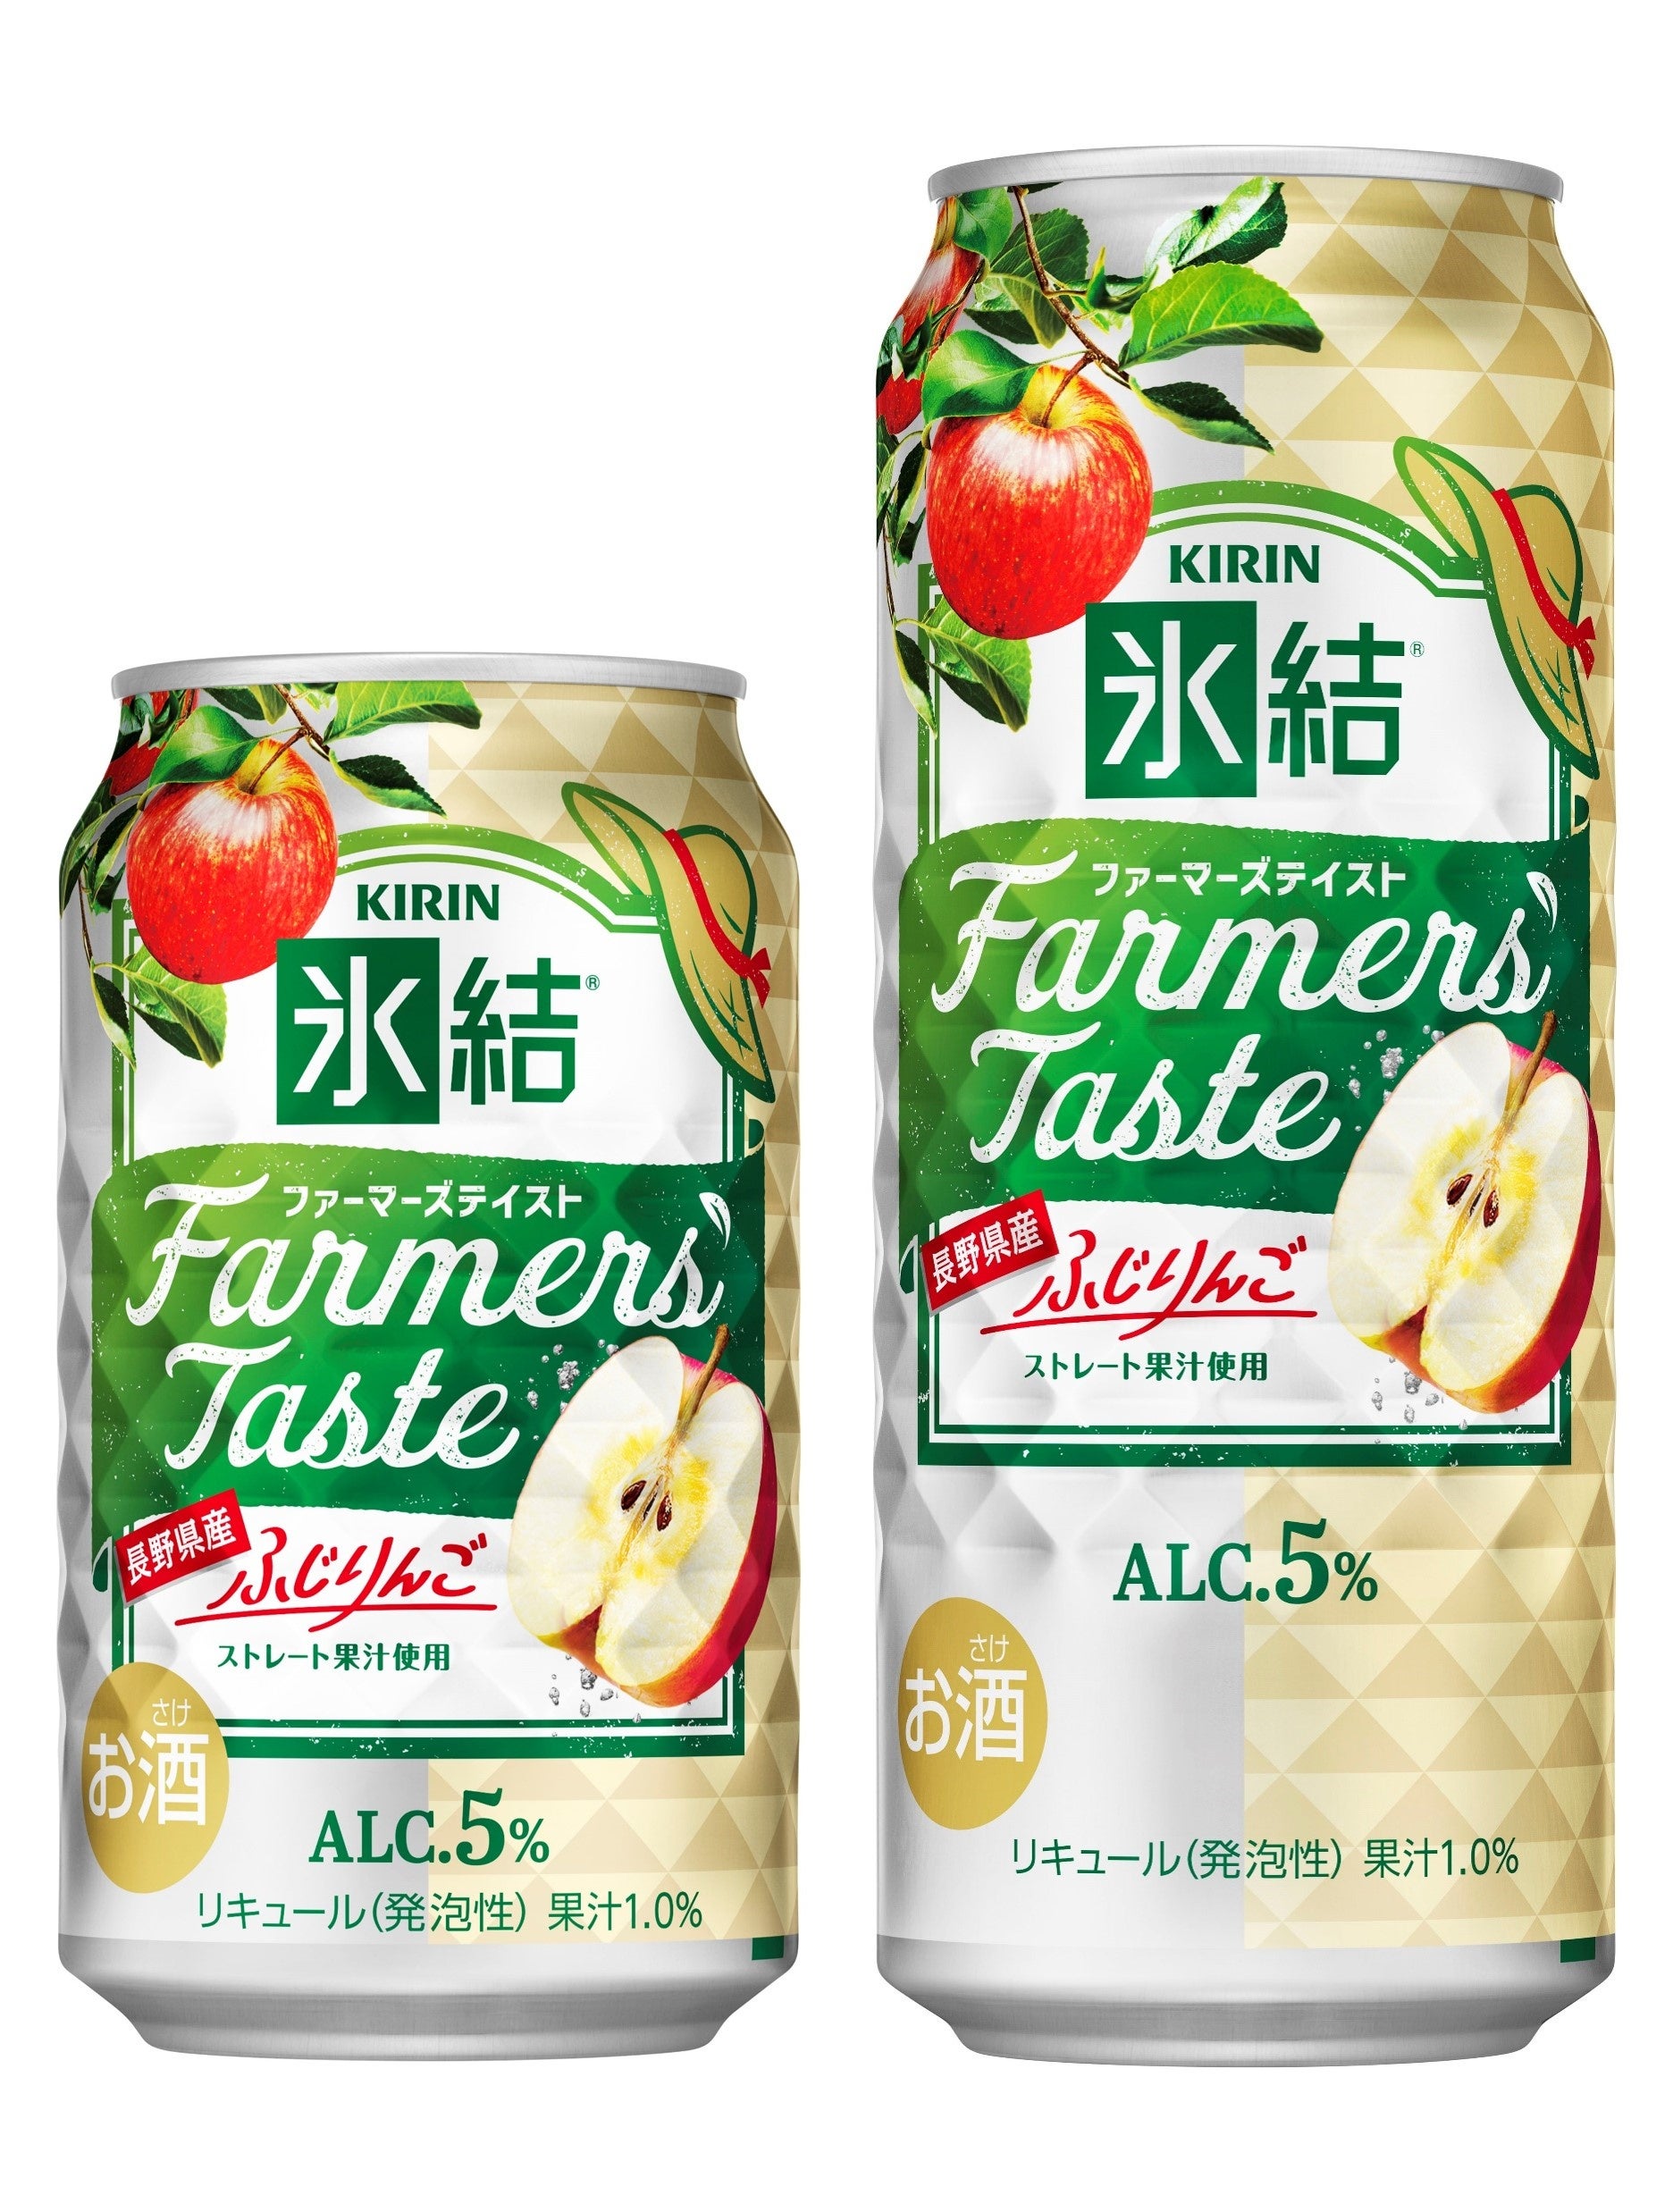 uL X(R)Farmersf Taste 쌧Yӂ񂲁iԌ/ZuACjv72i΁jVI